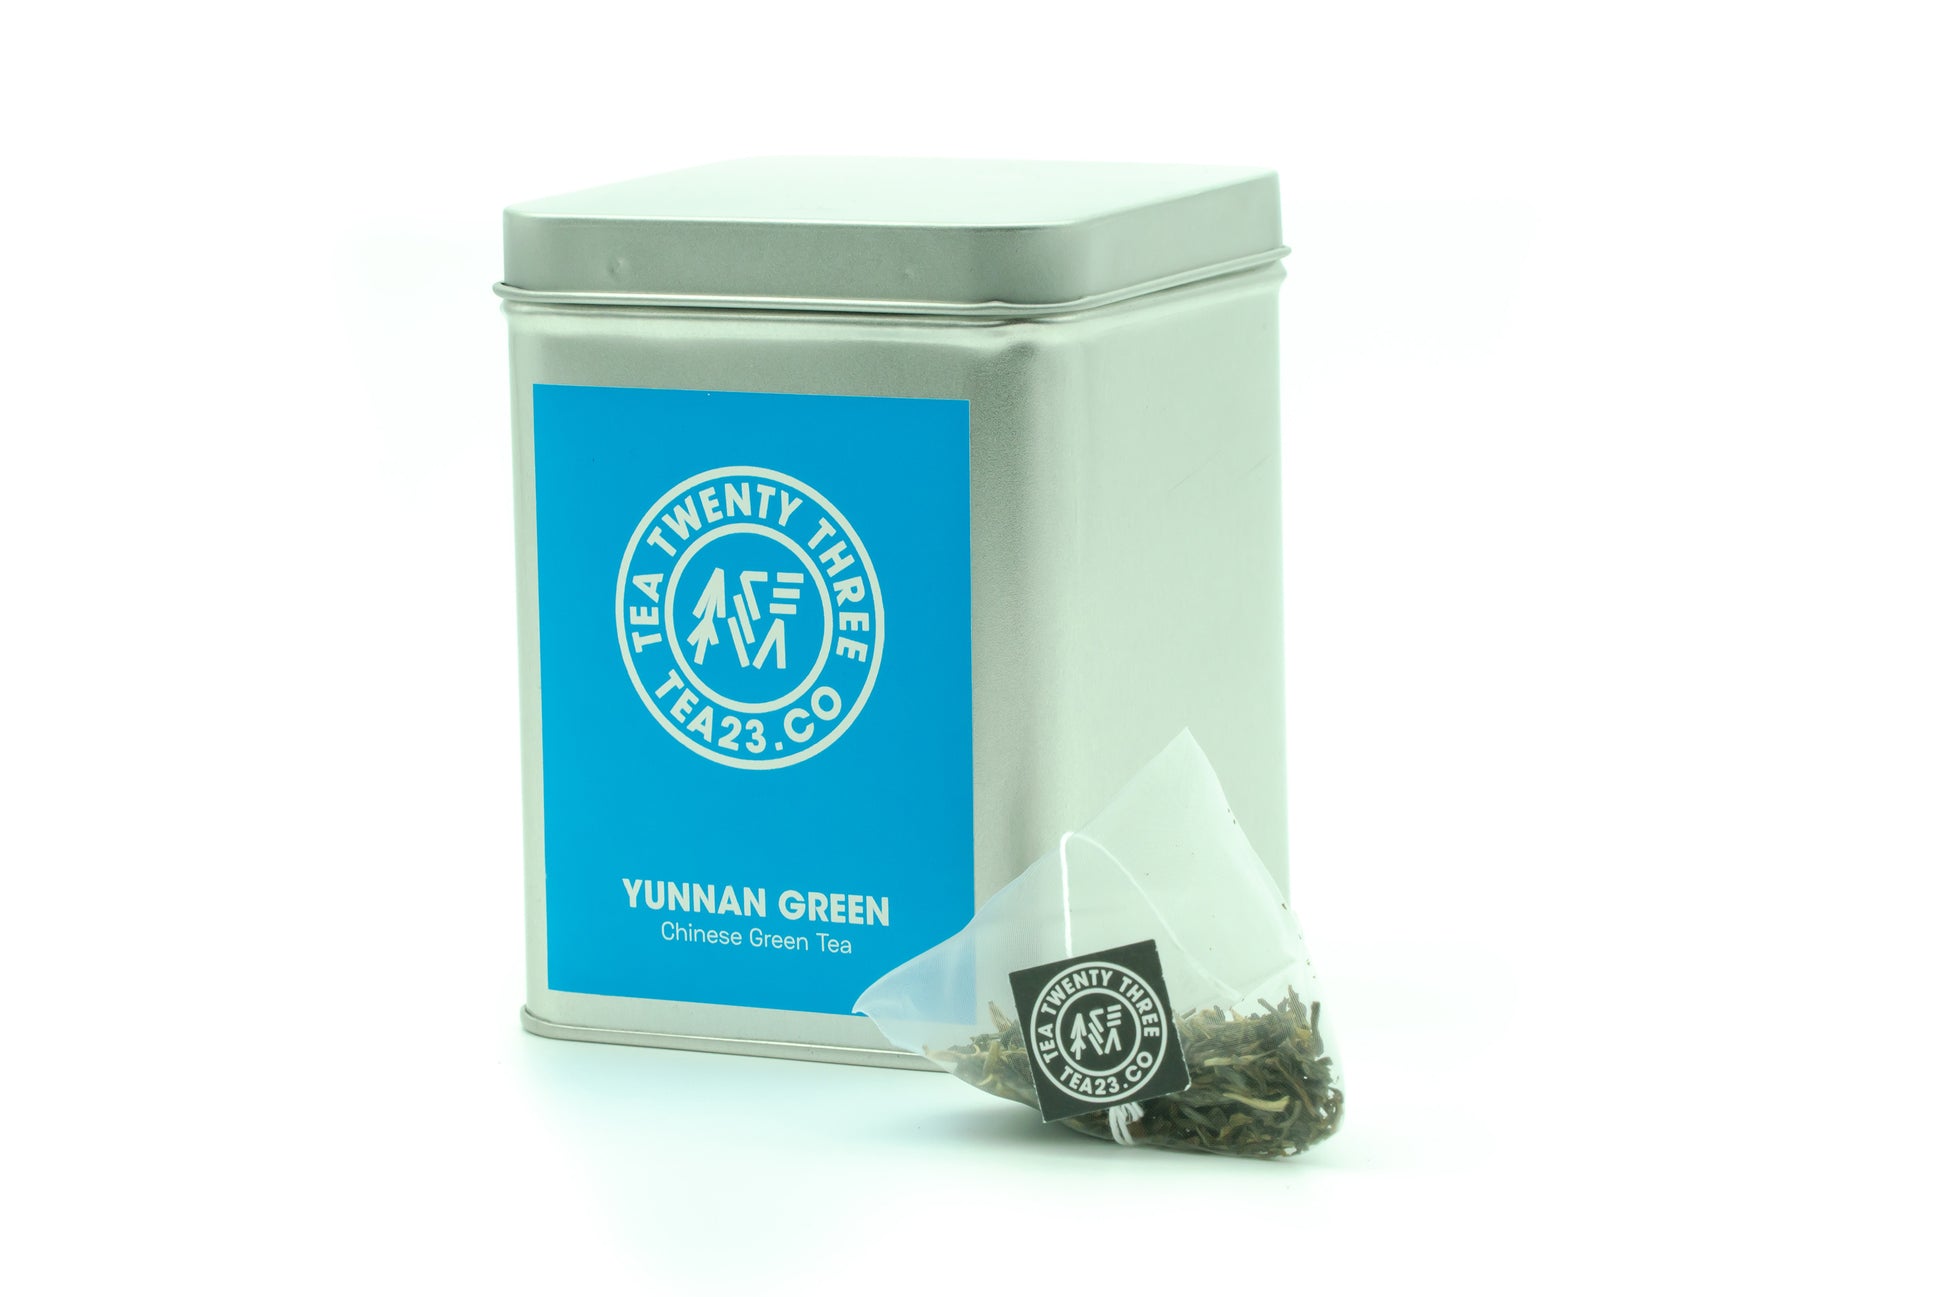 Yunnan green tea in a pyramid tea bag from Tea23 sits in front of a tea caddy